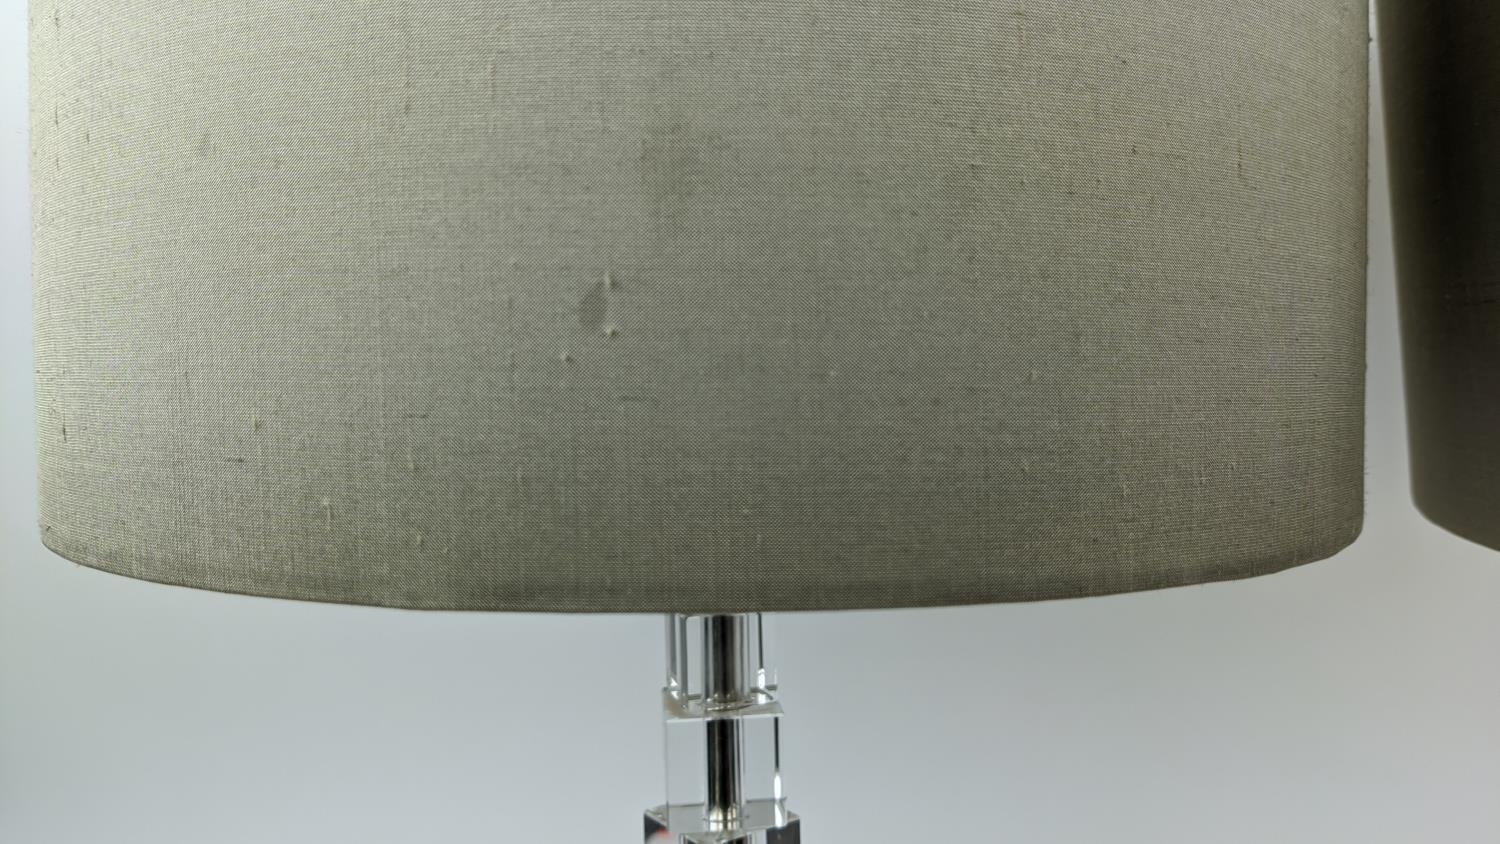 PORTA ROMANA TABLE LAMPS, a pair, with Porta Romana shades, 66cm H. (2) - Image 5 of 8